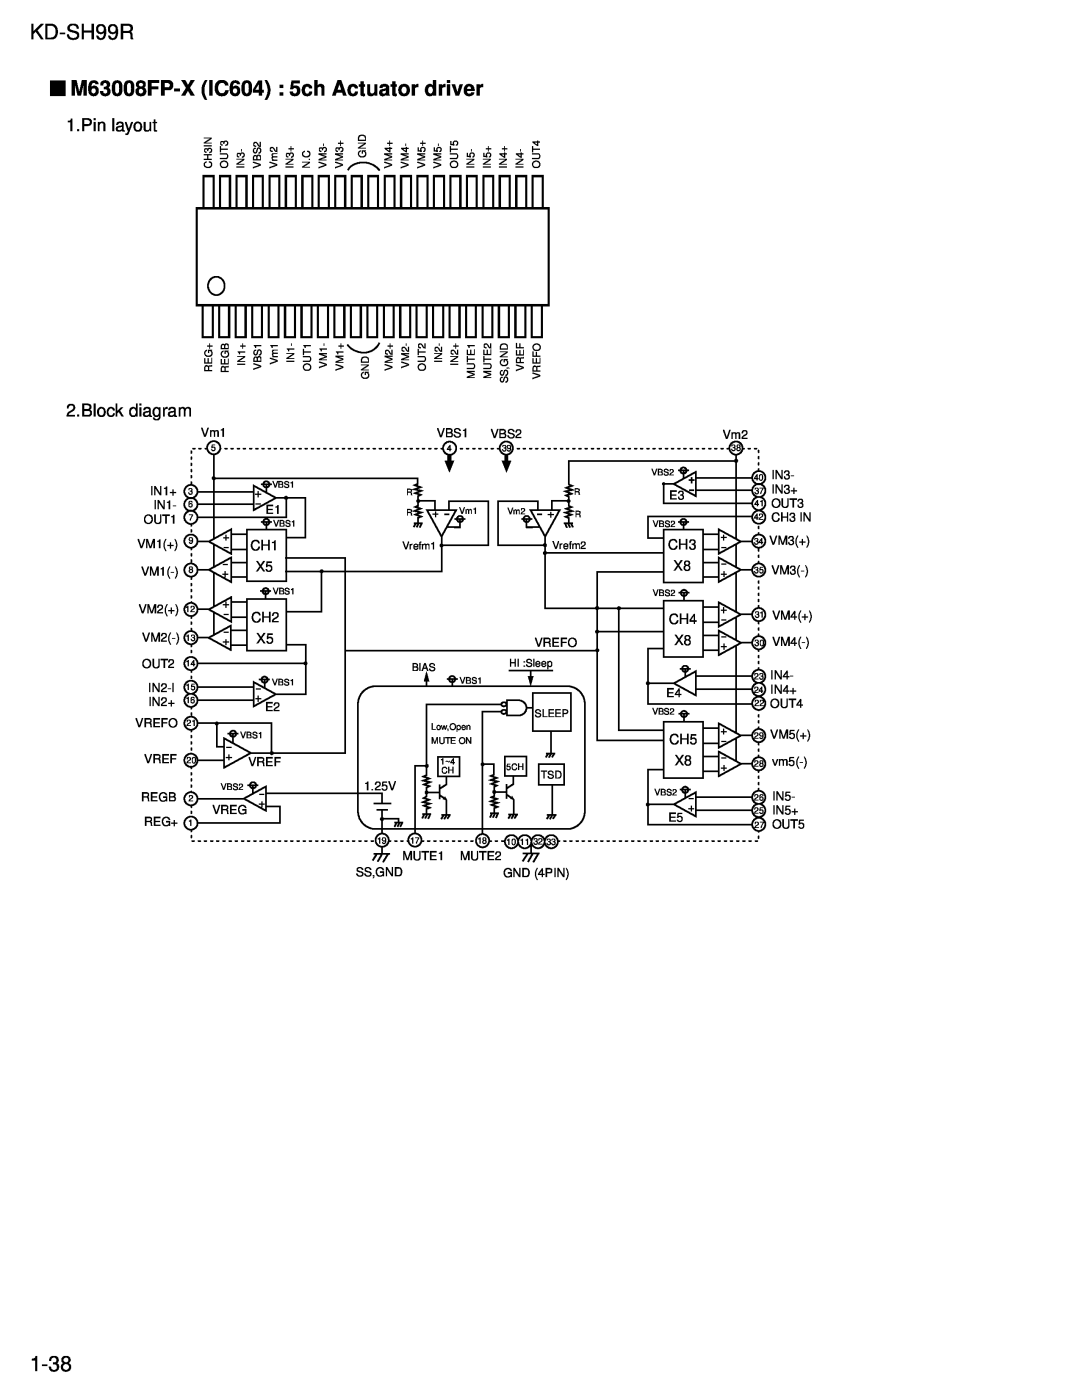 JVC KD-SH99R service manual M63008FP-XIC604 5ch Actuator driver, 1-38 